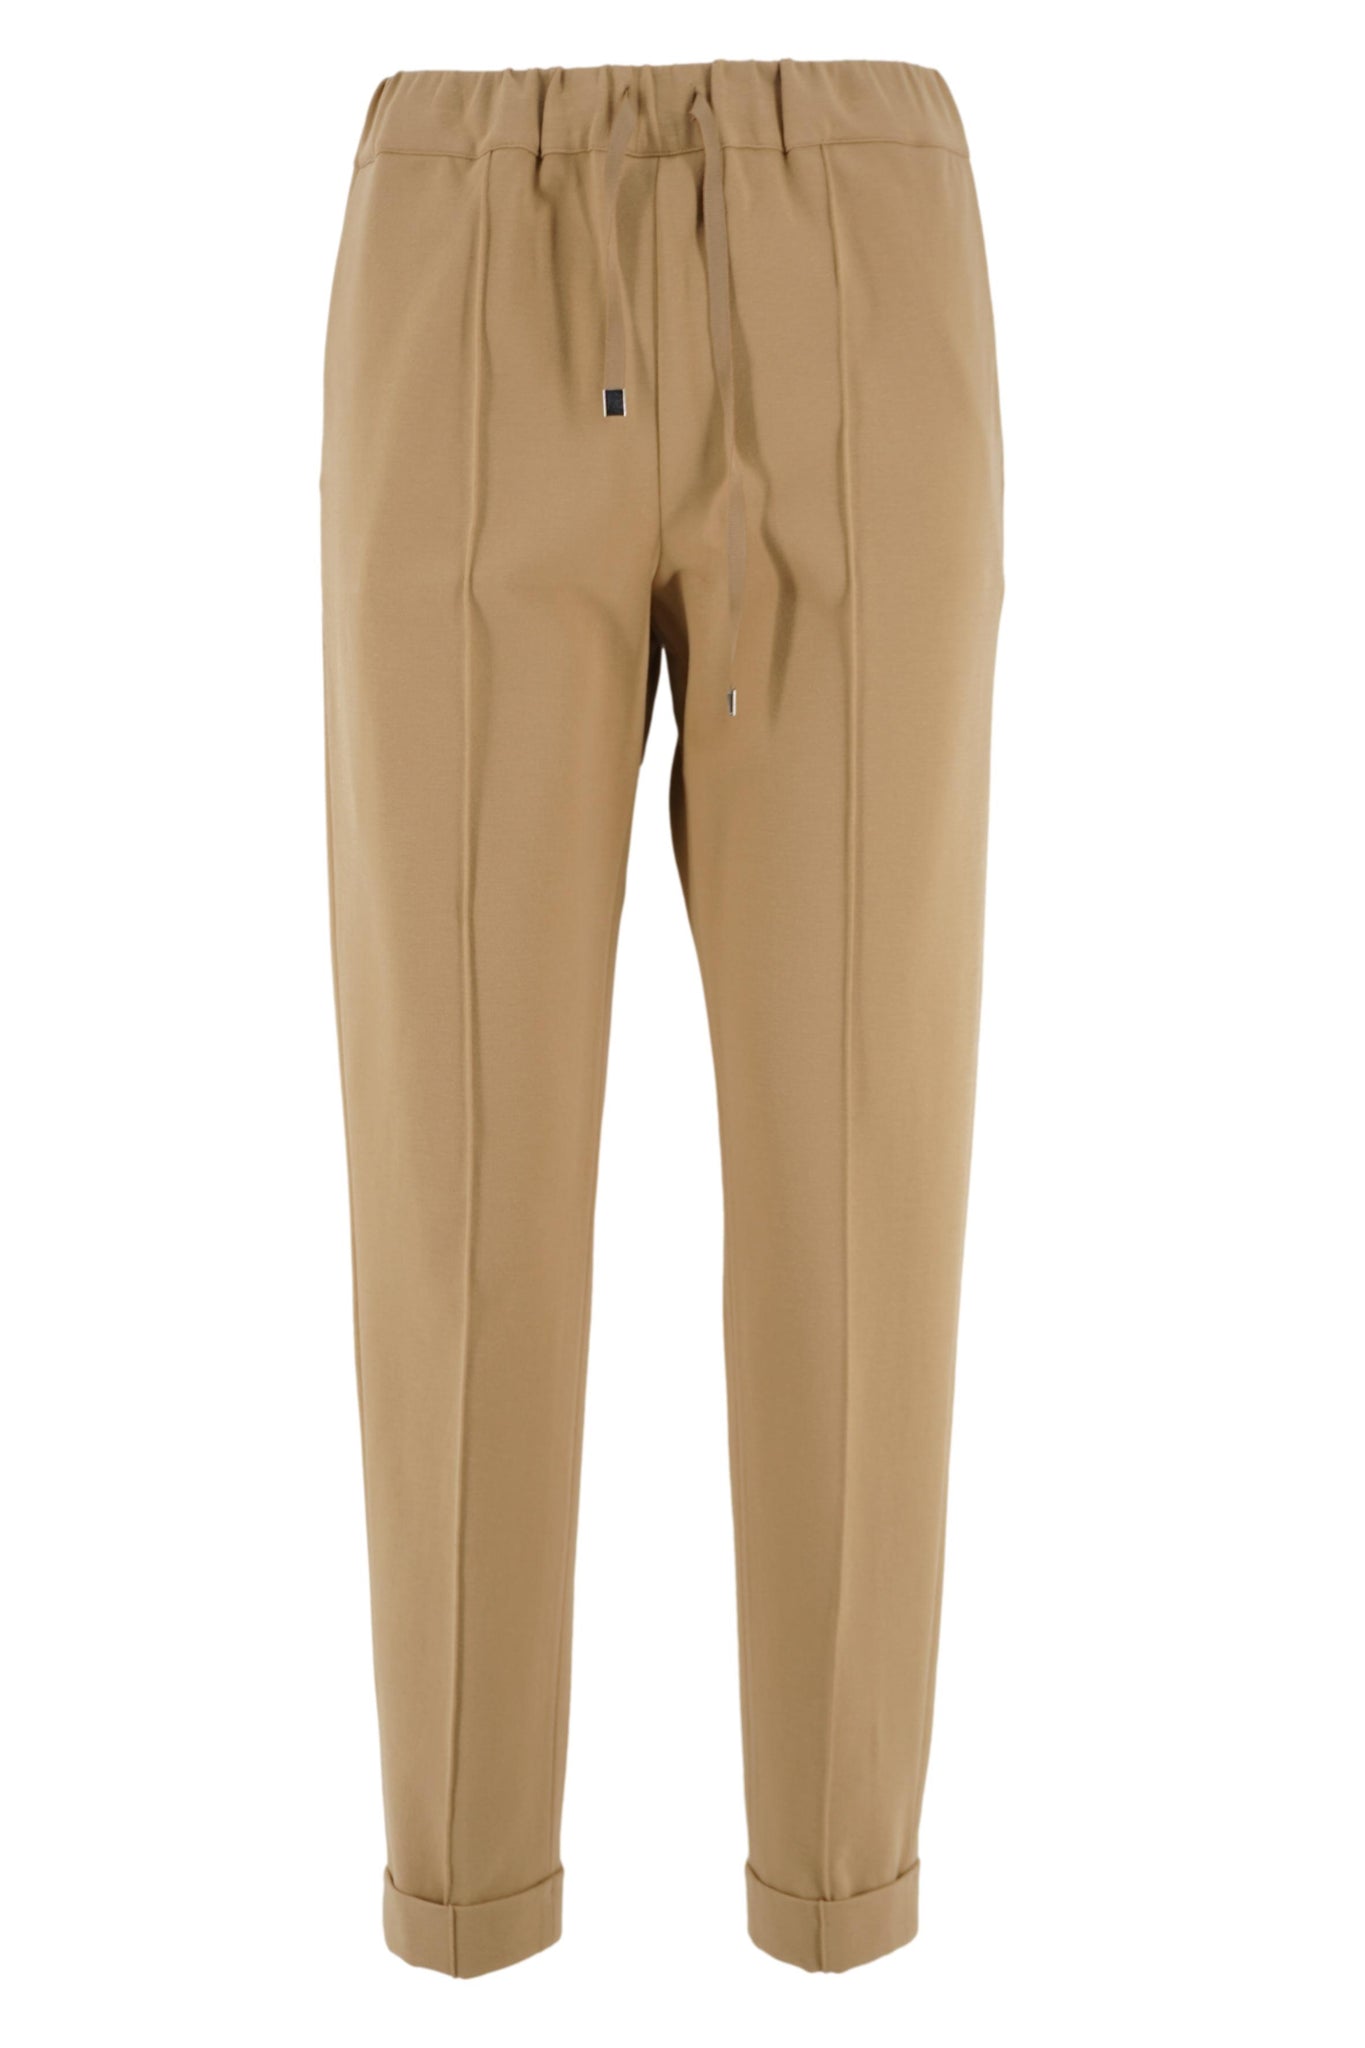 Pantalone con Coulisse in Vita / Beige - Ideal Moda